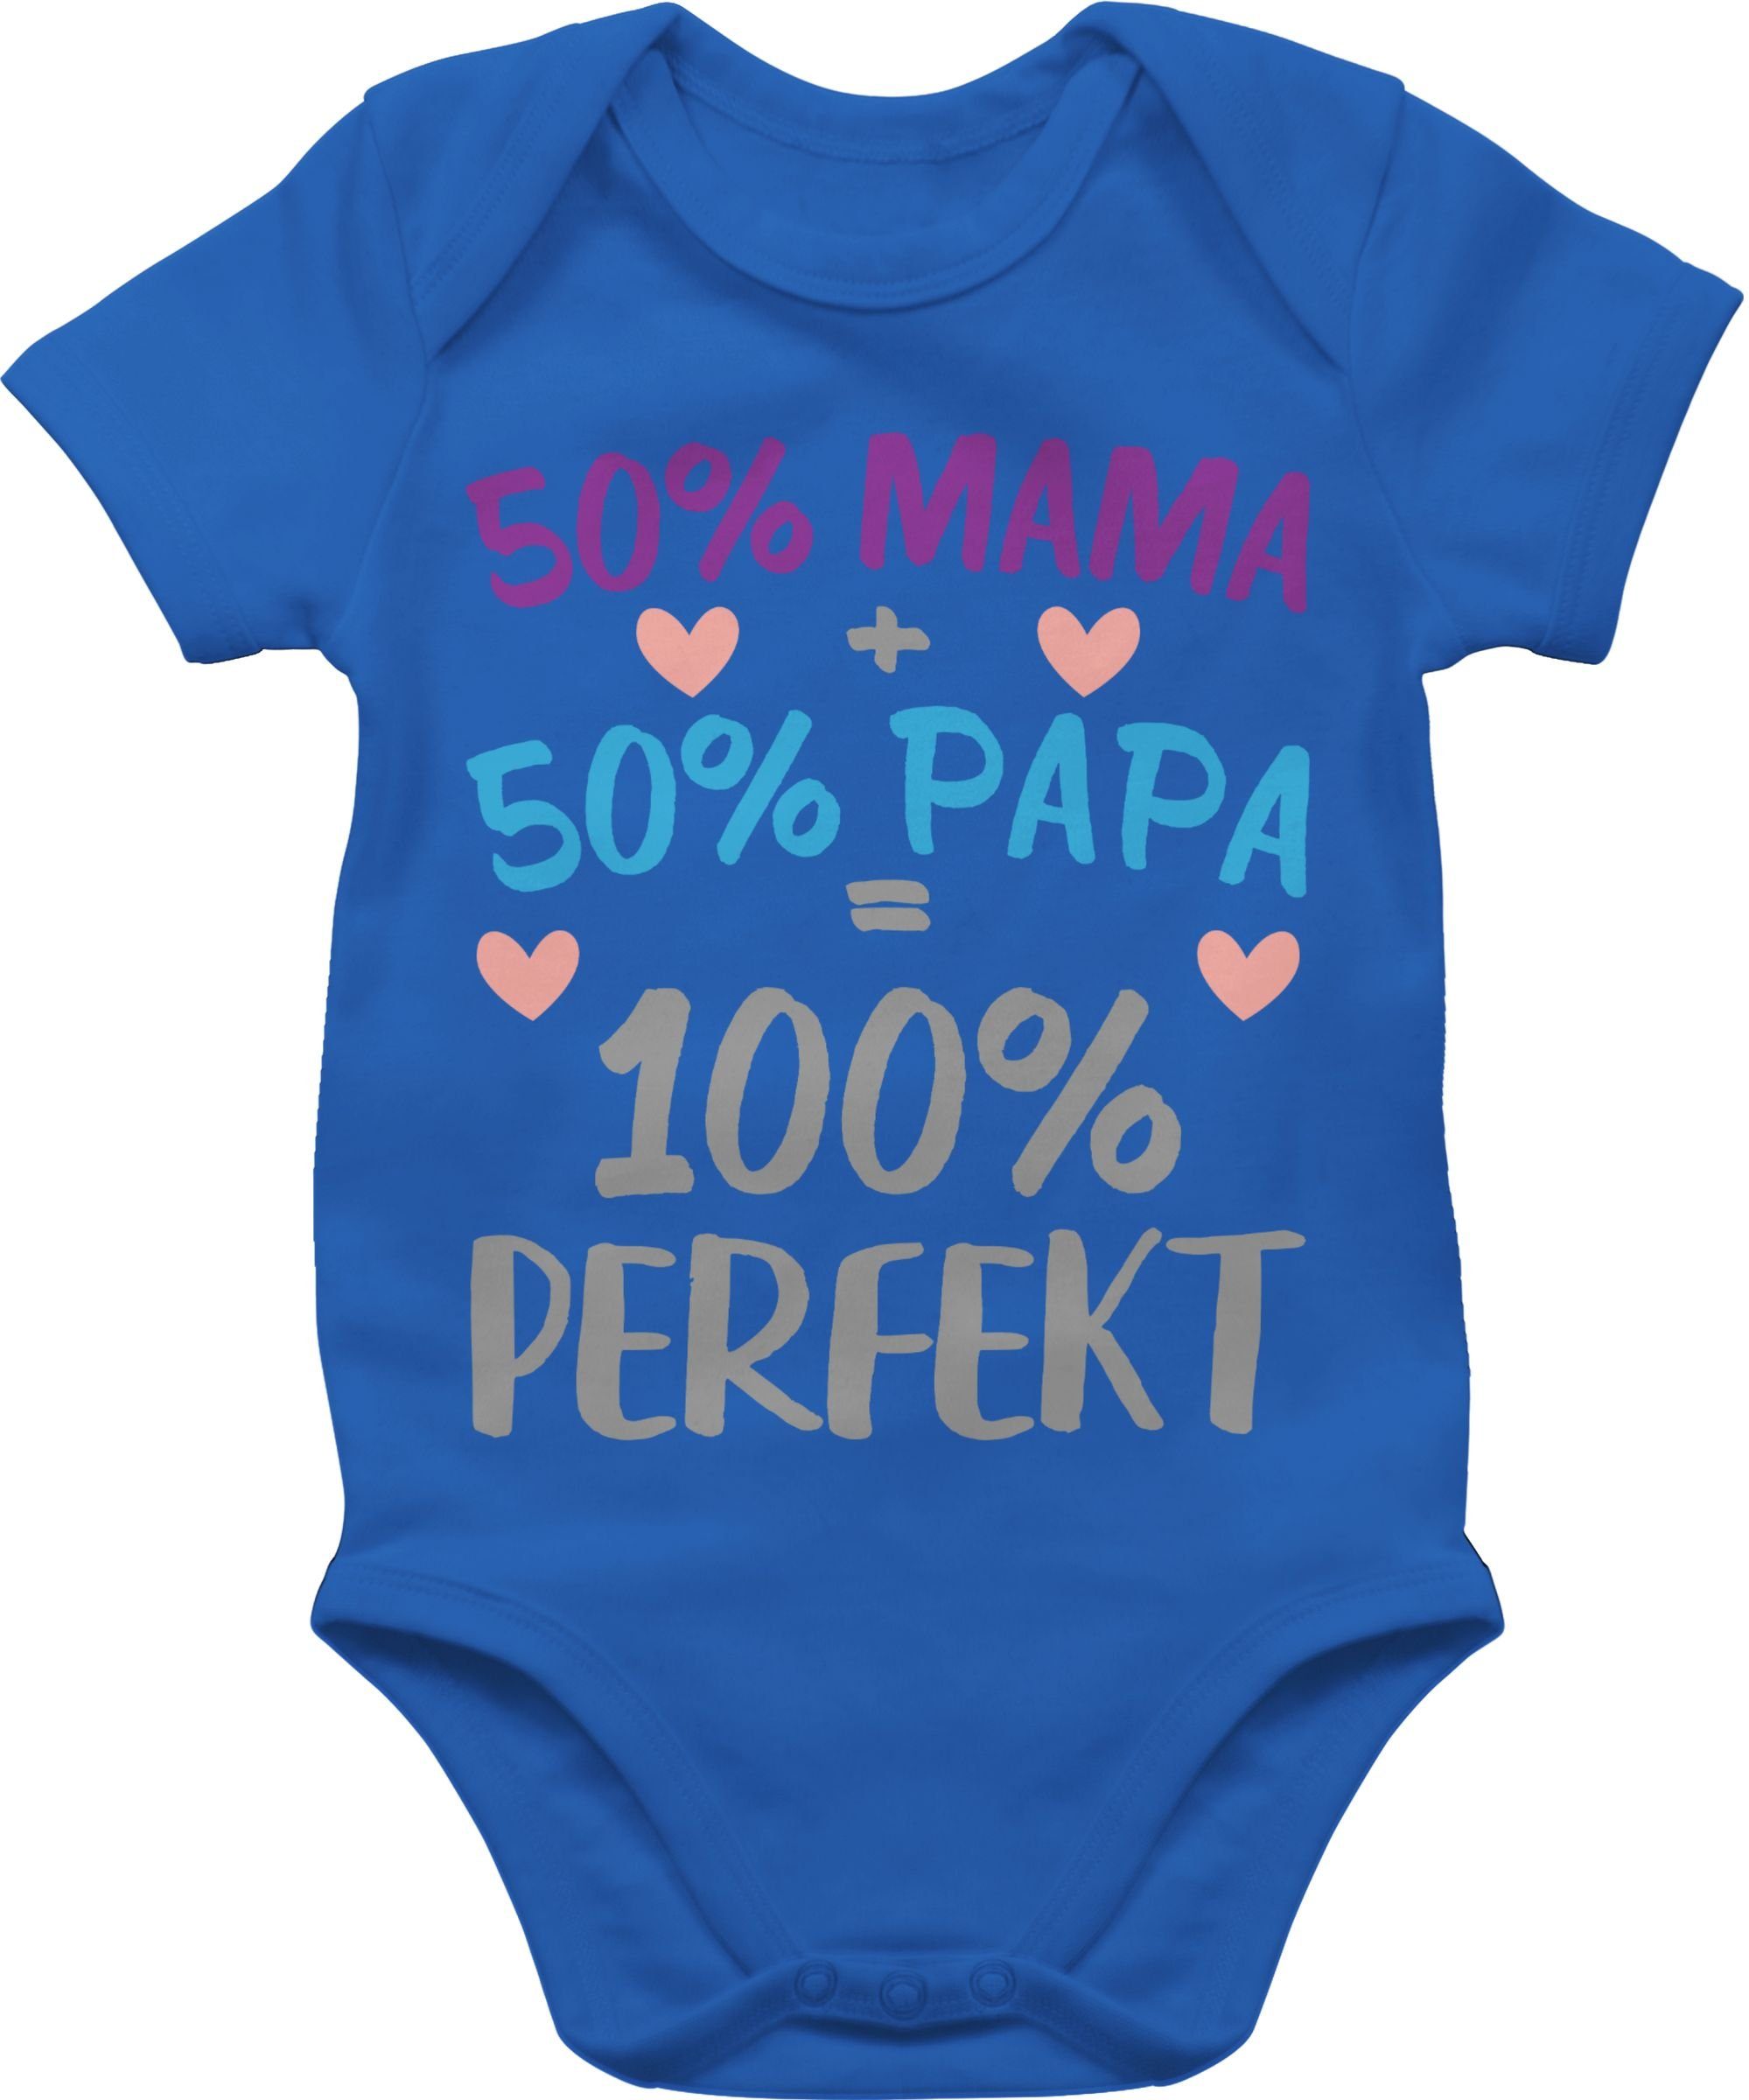 Shirtracer Shirtbody 50 % Mama 50 % Papa 100 % Perfekt Sprüche Baby 3 Royalblau